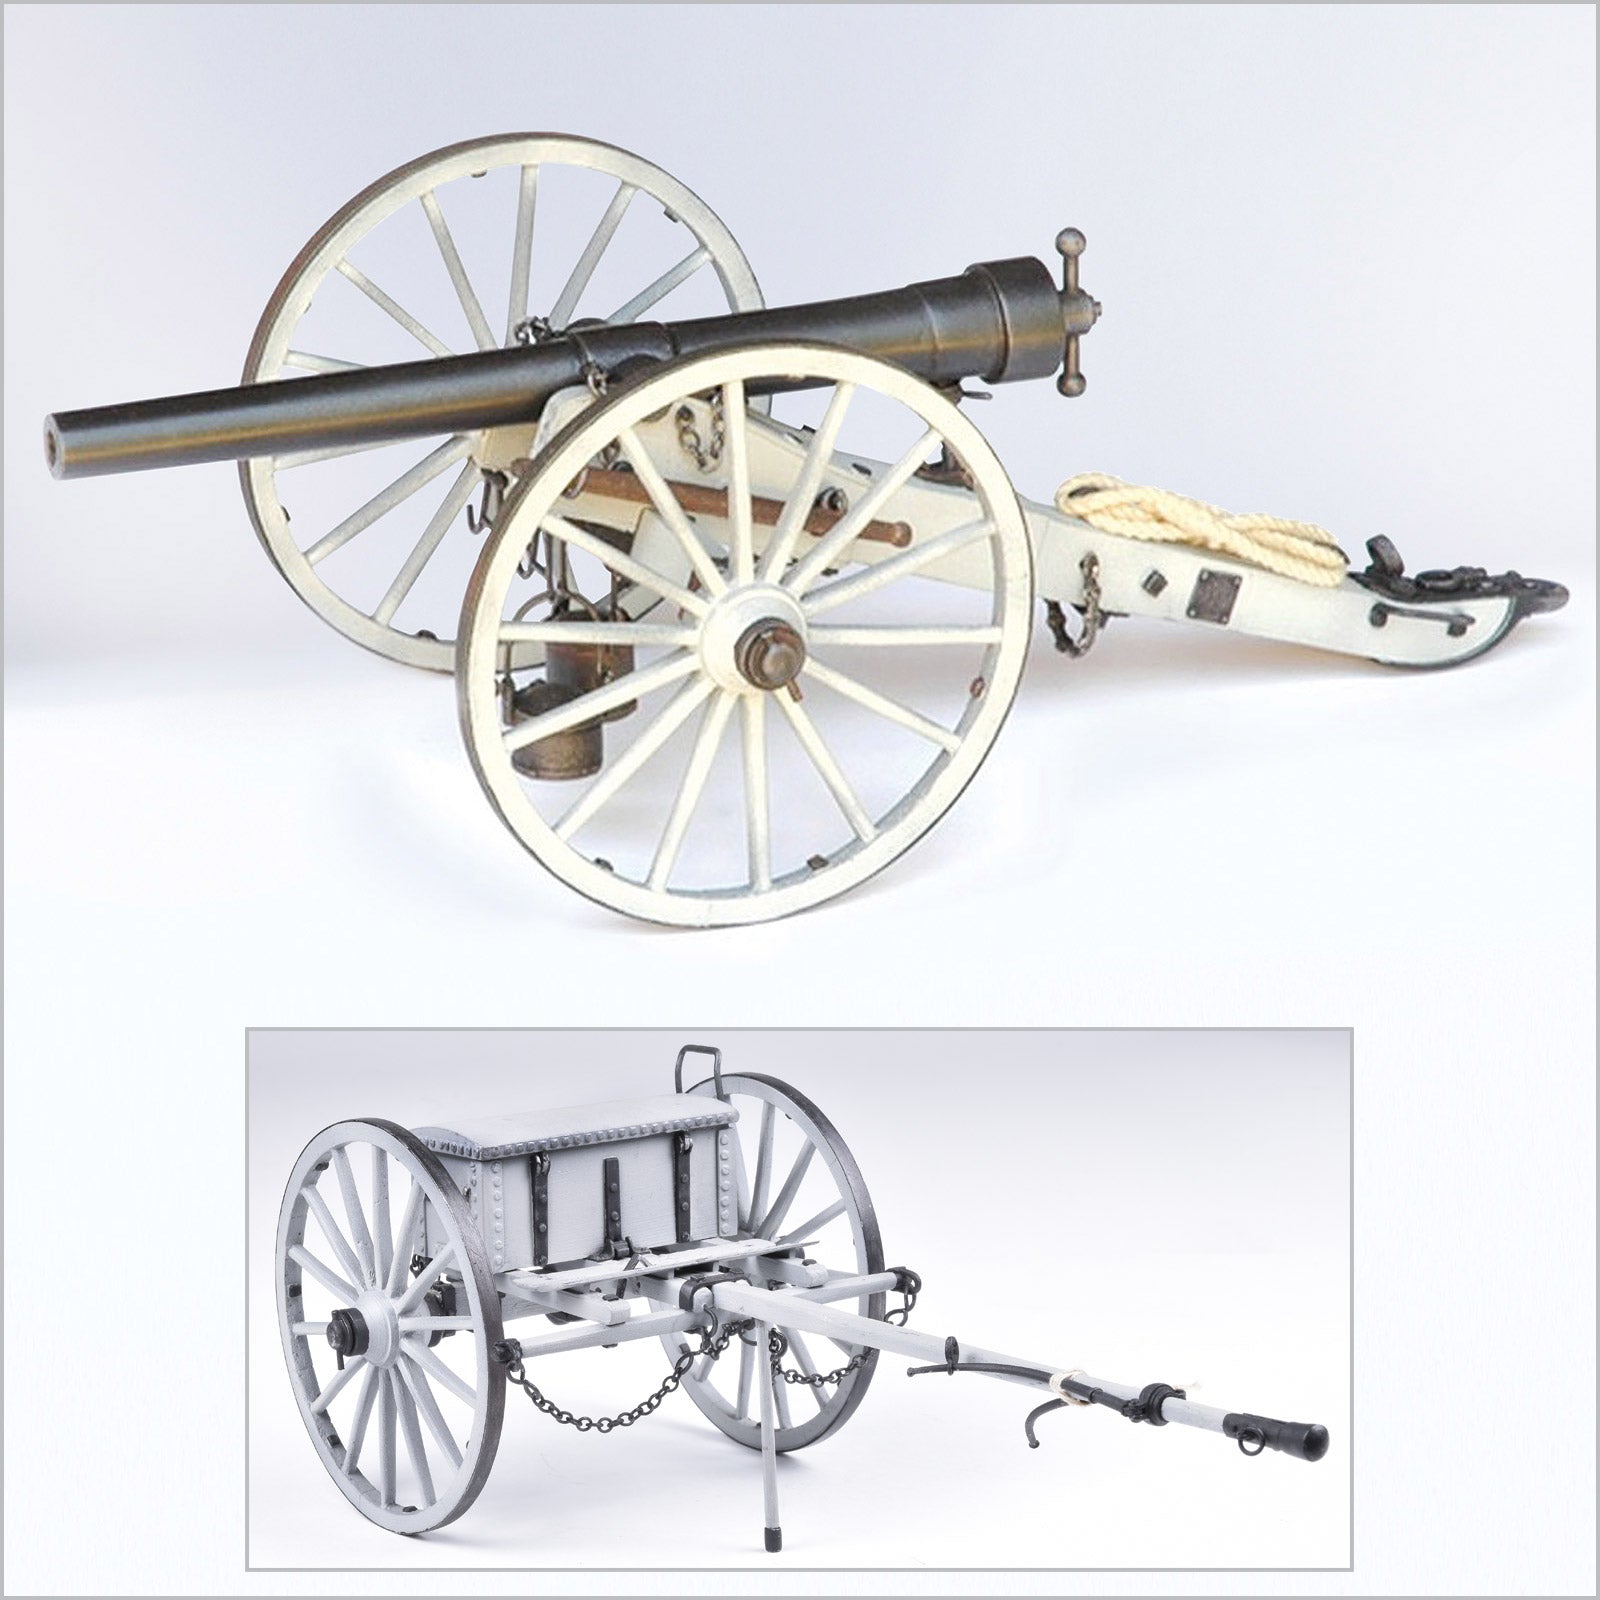 U.S.Civil War "James" Cannon & Limber Ammo Cart Combo Kit, 1/16 Scale - Micro - Mark Scale Model Kits